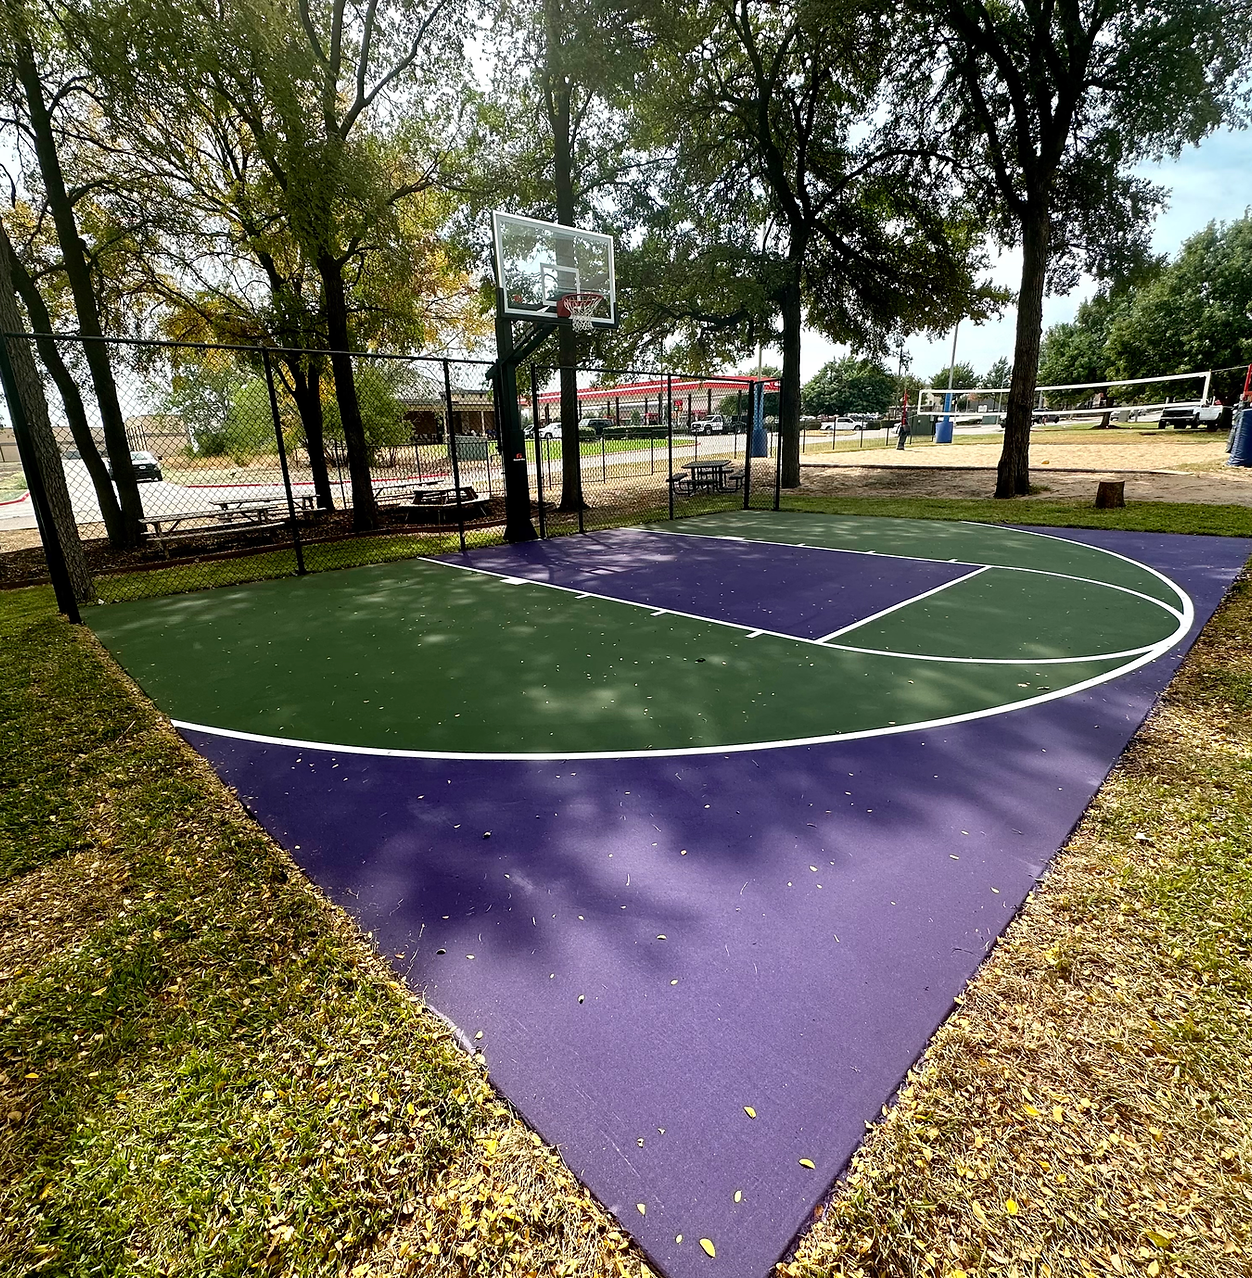 A backyard basketball court